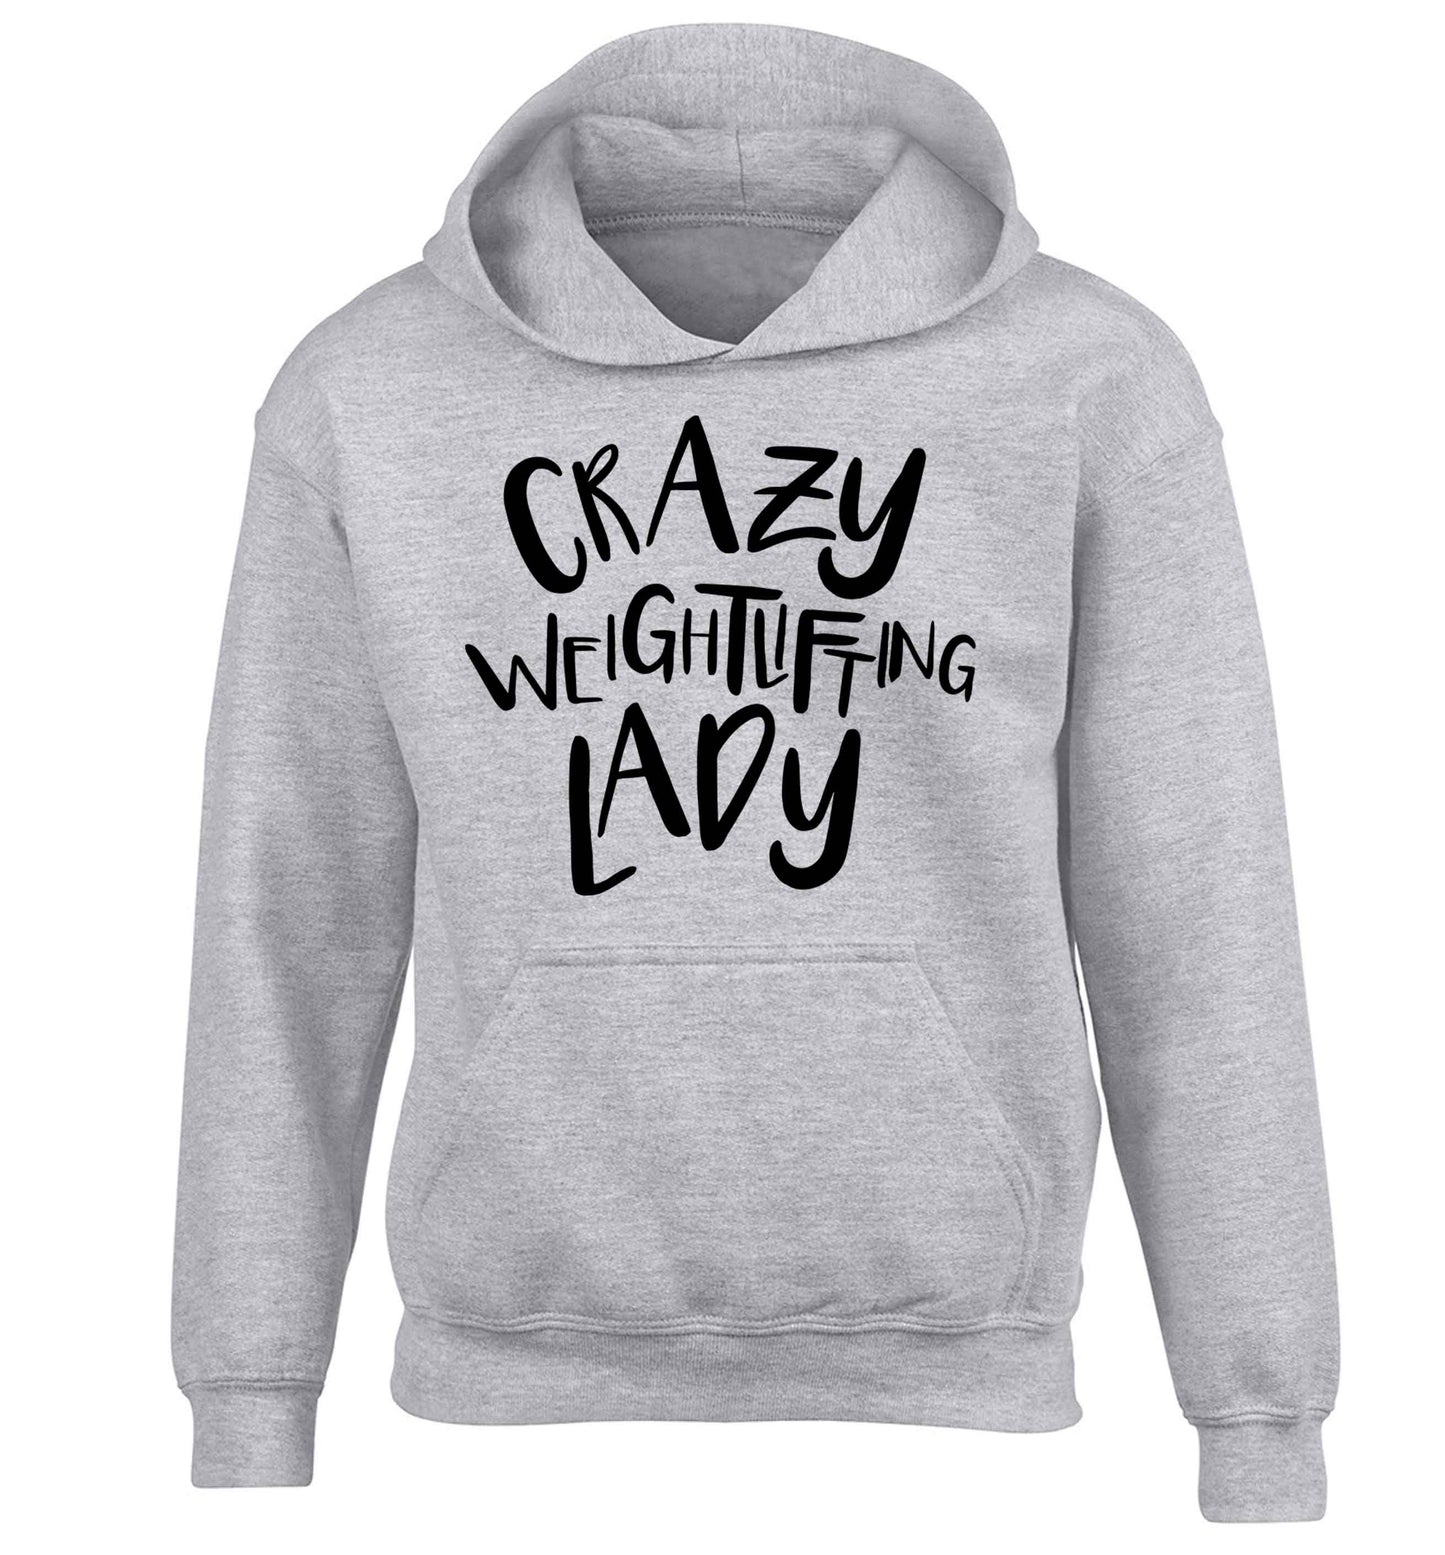 Crazy weightlifting lady children's grey hoodie 12-13 Years